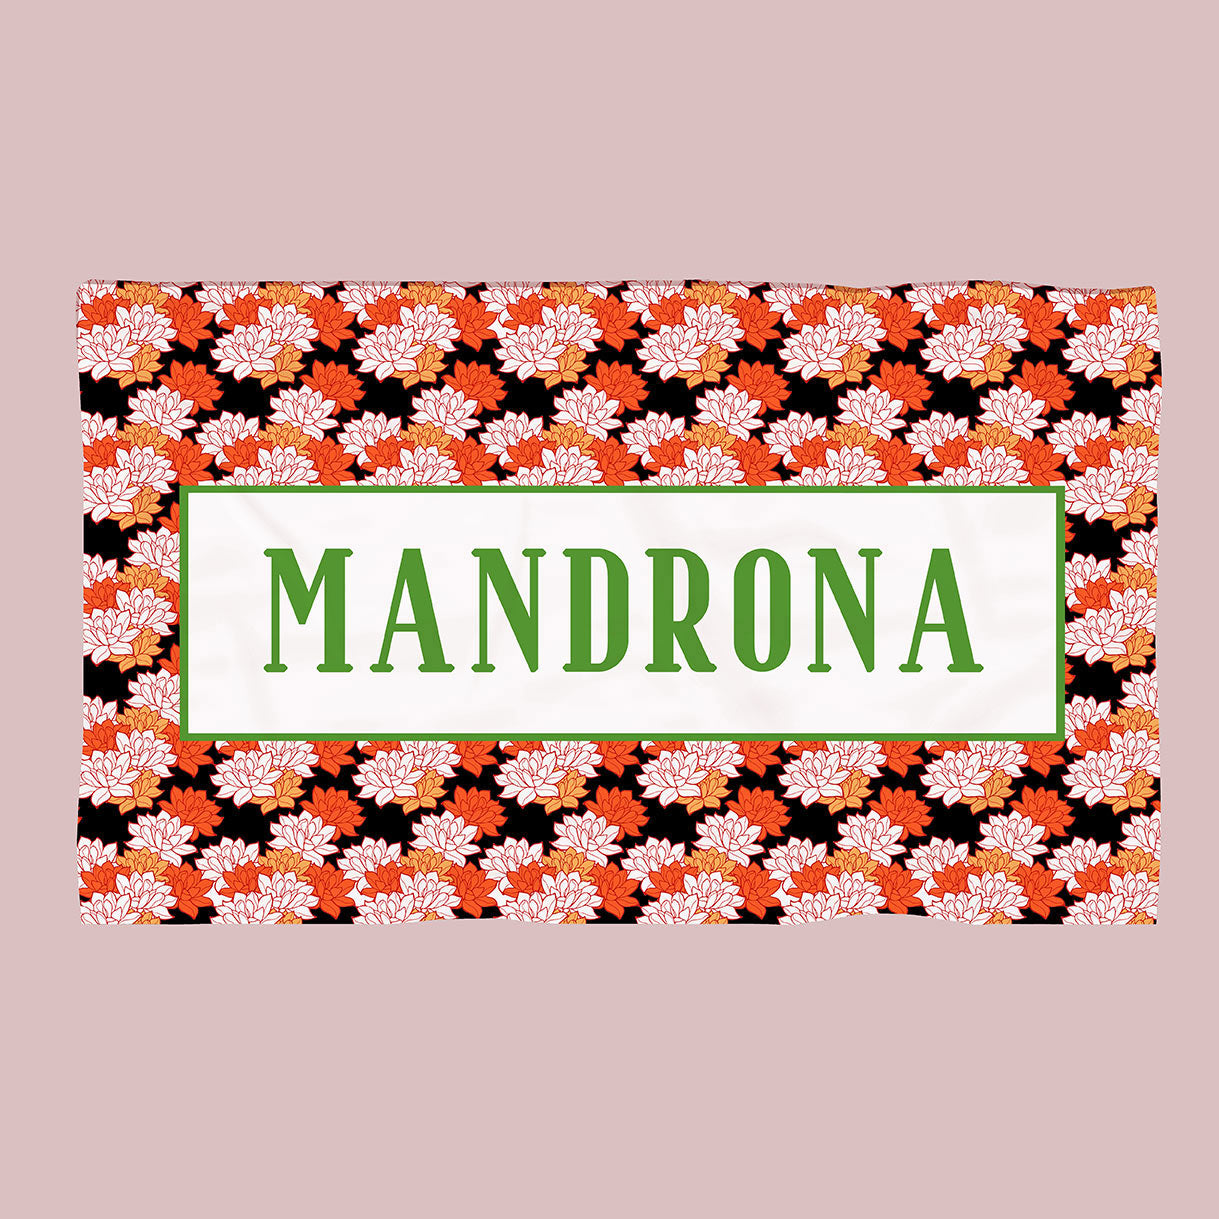 Plaid Mandrona